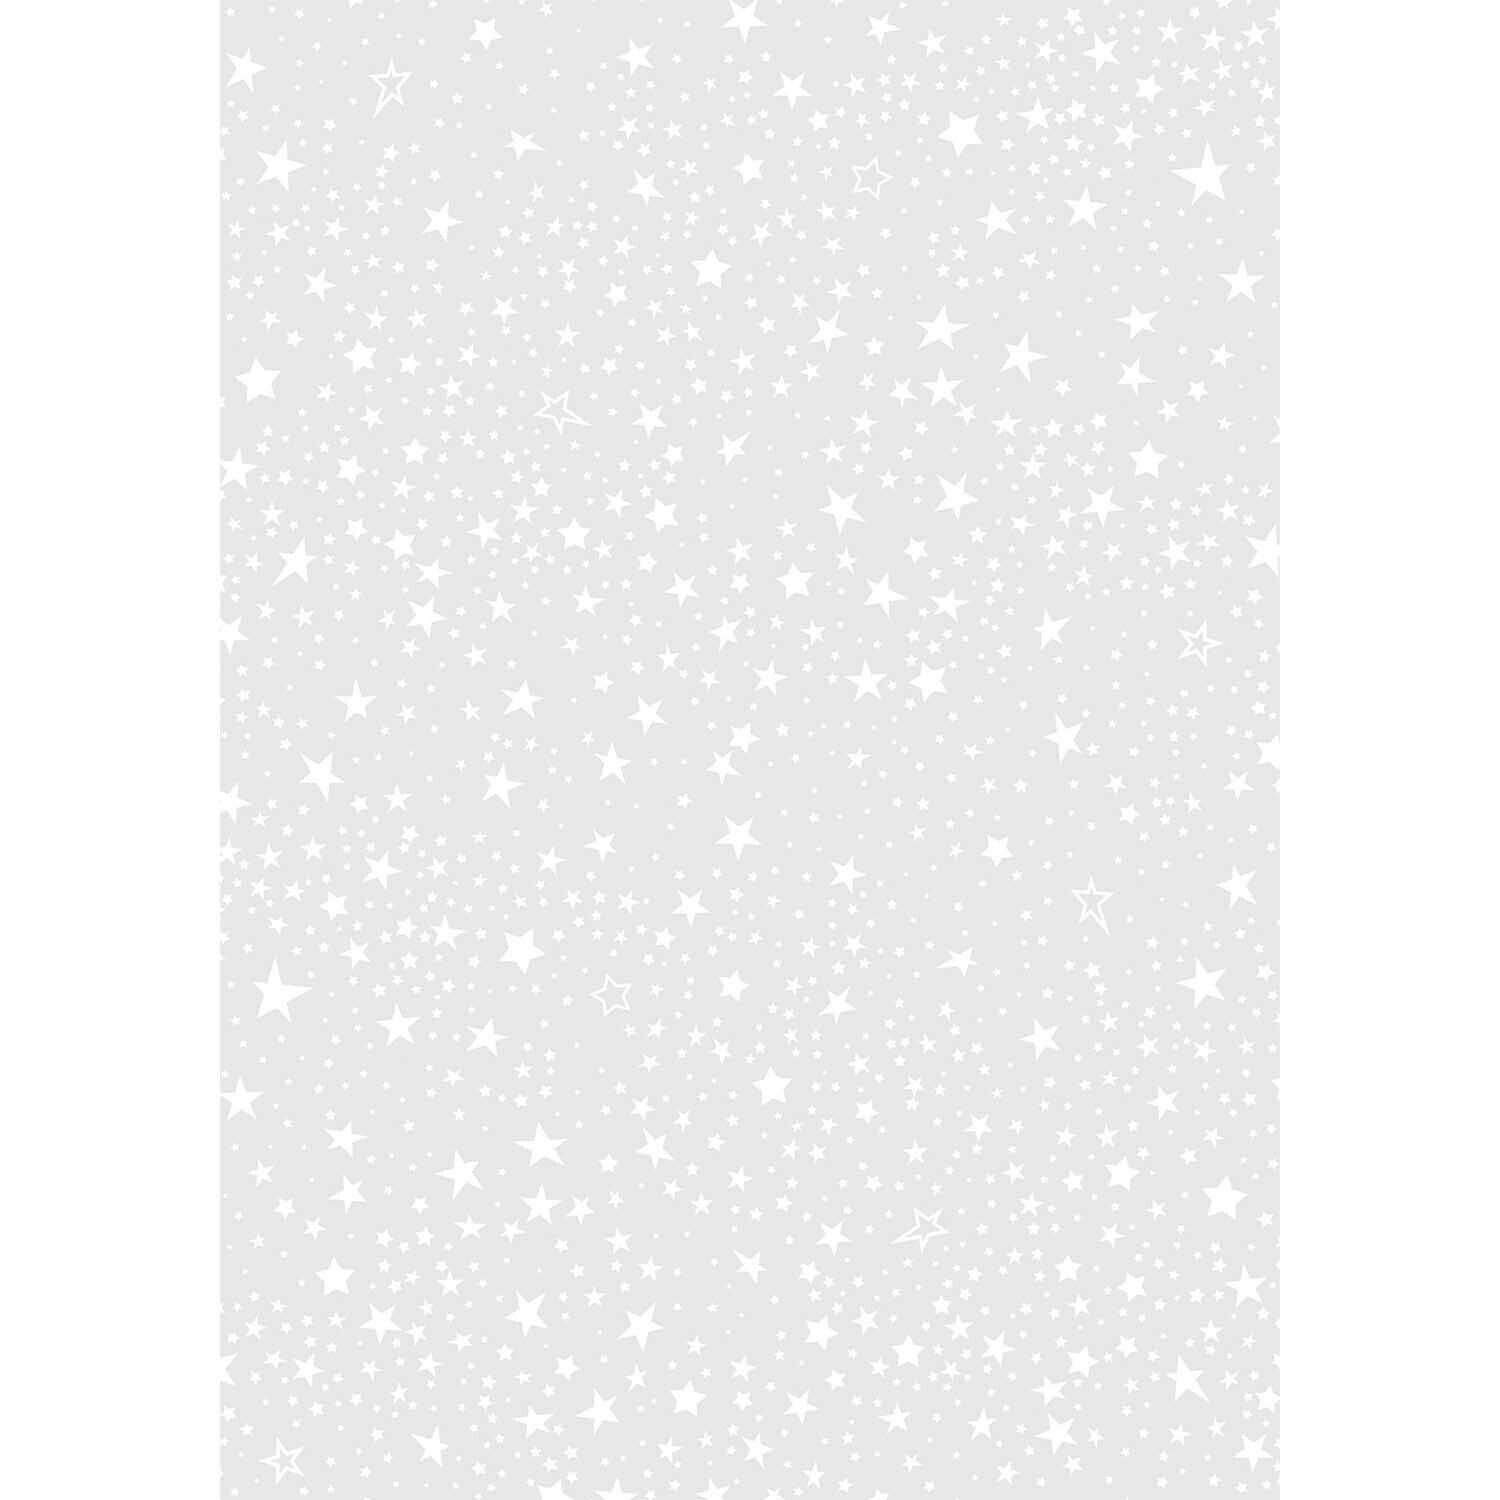 Transparentpapier Sterne weiß 50x70cm 115g/m²